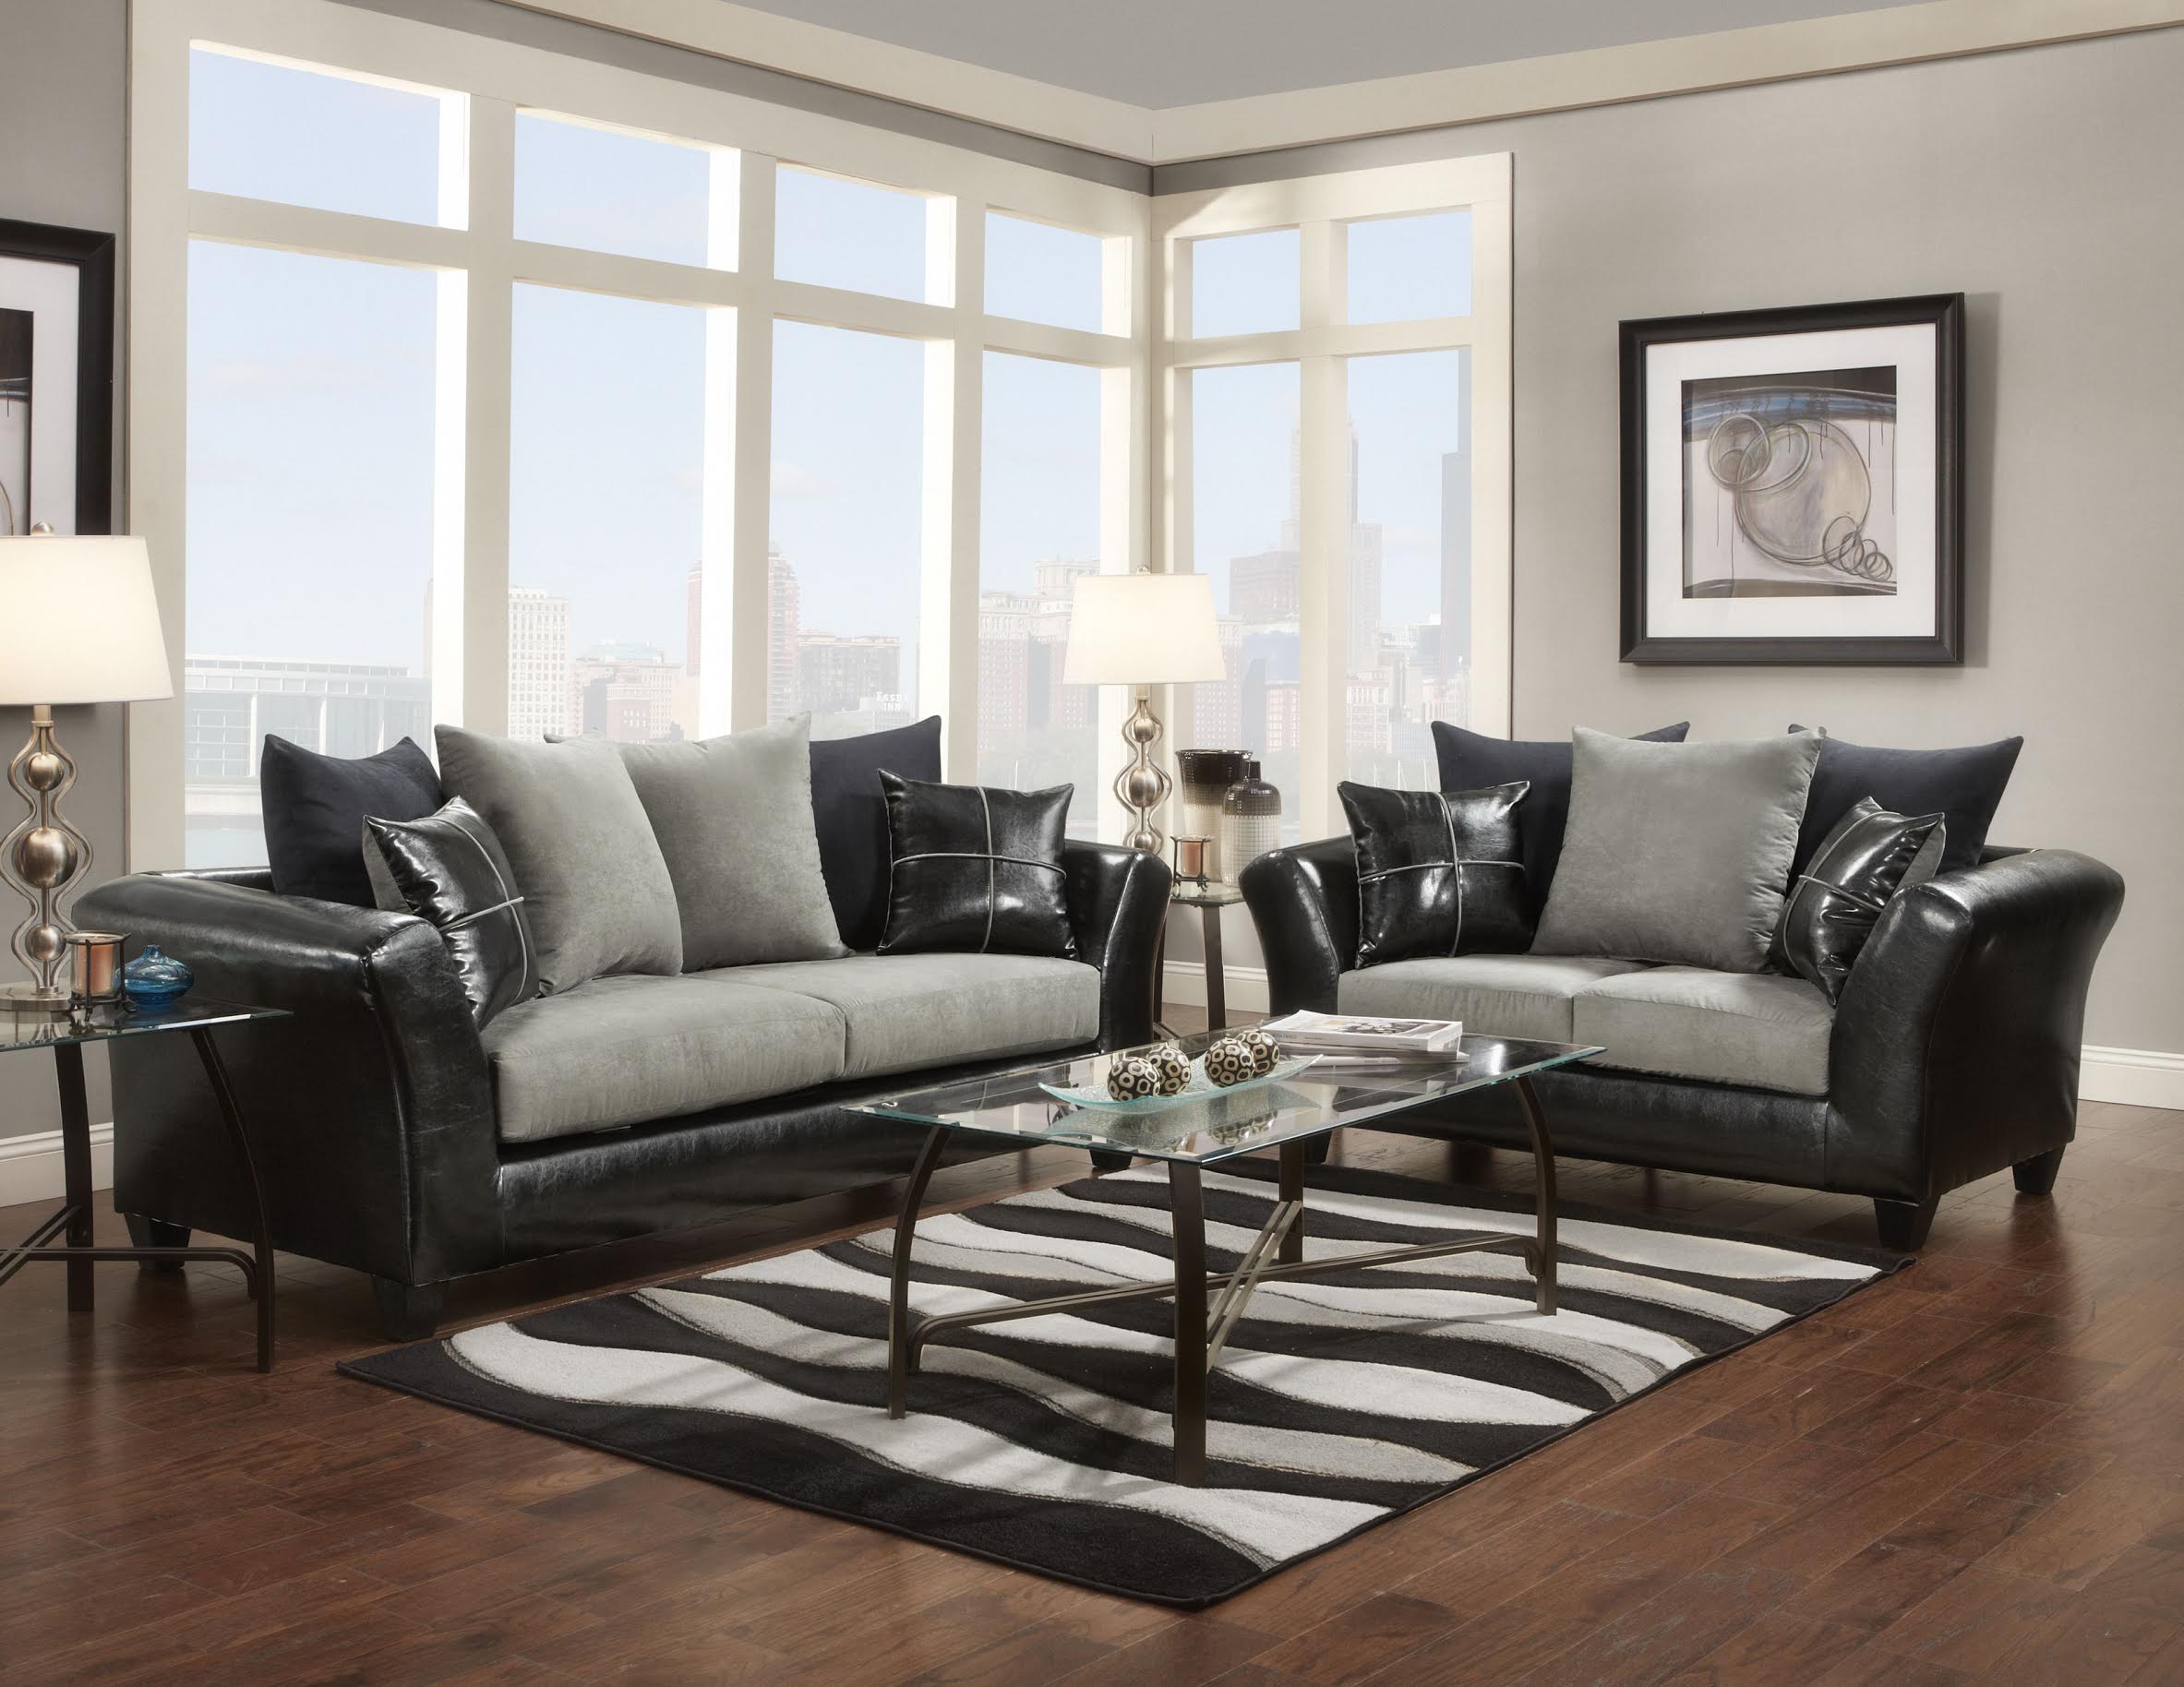 deals of living room furniture